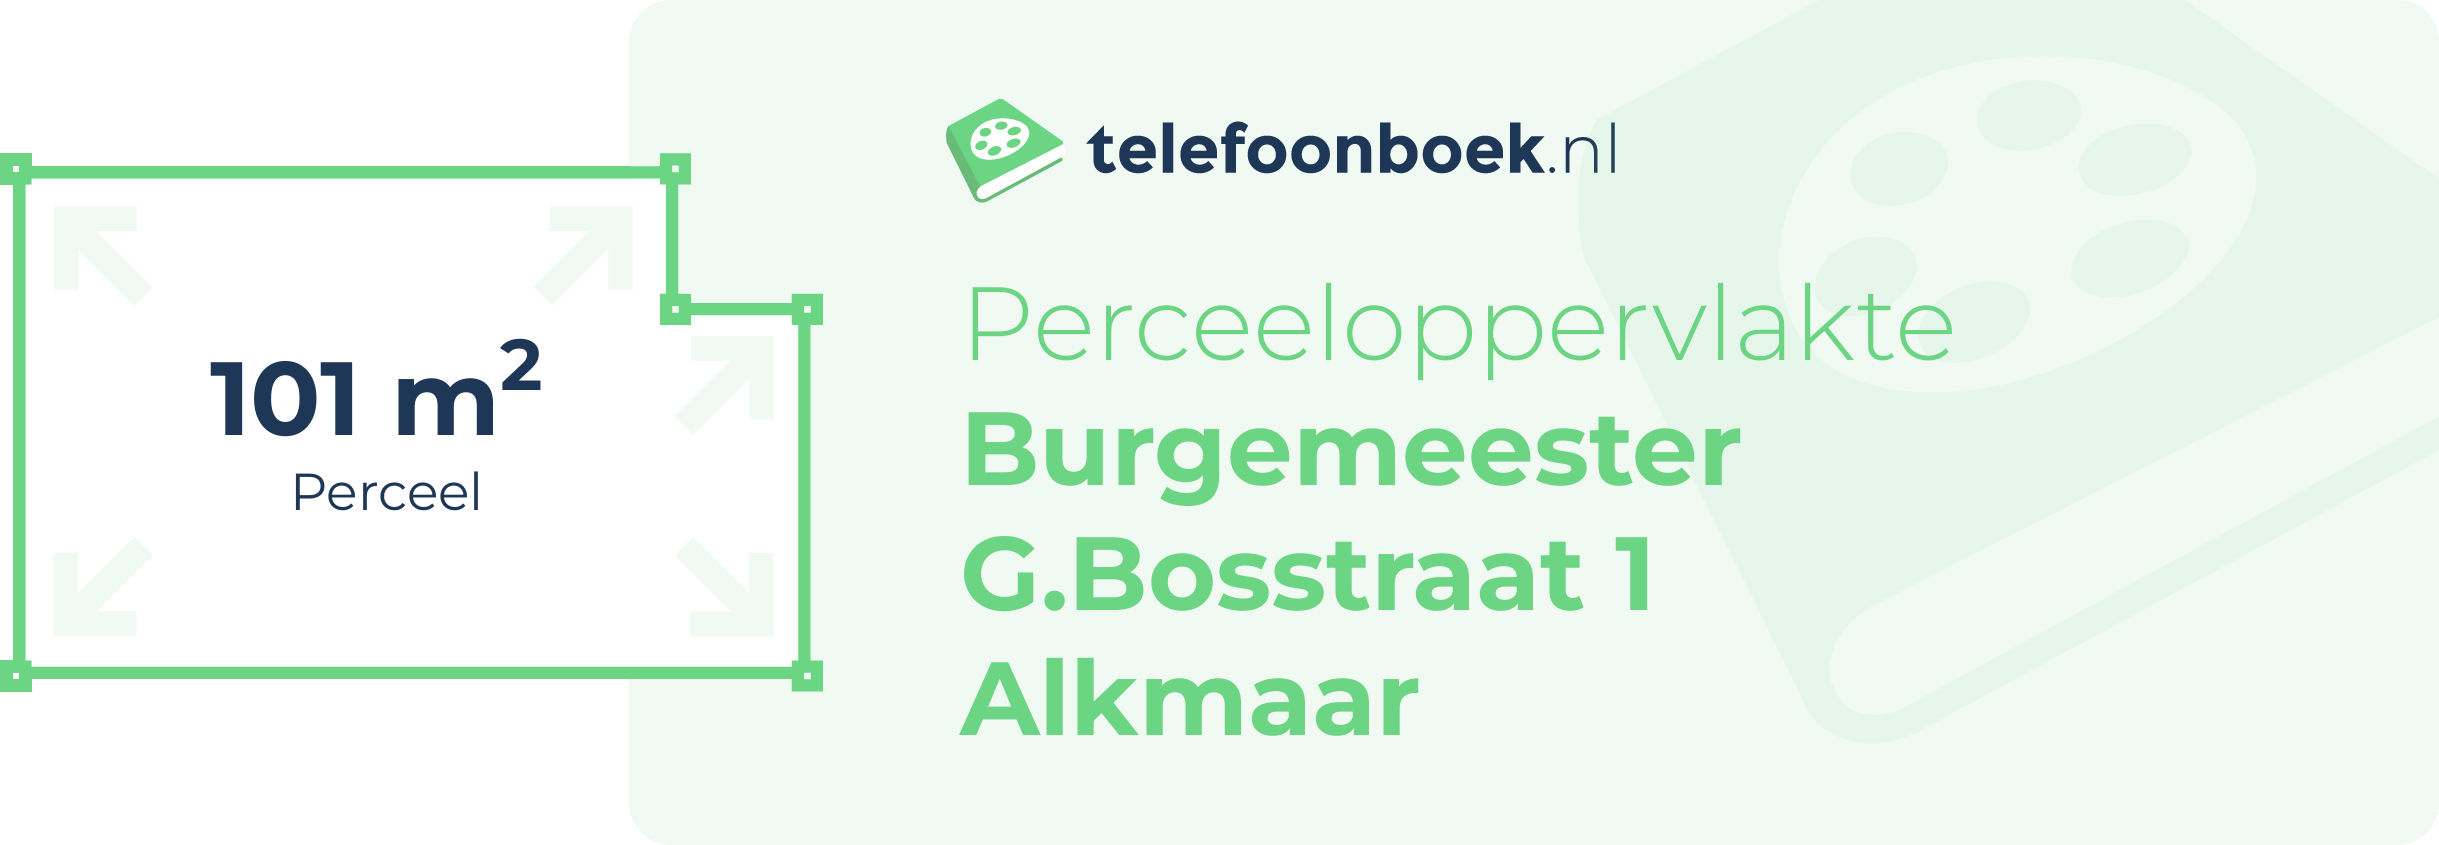 Perceeloppervlakte Burgemeester G.Bosstraat 1 Alkmaar